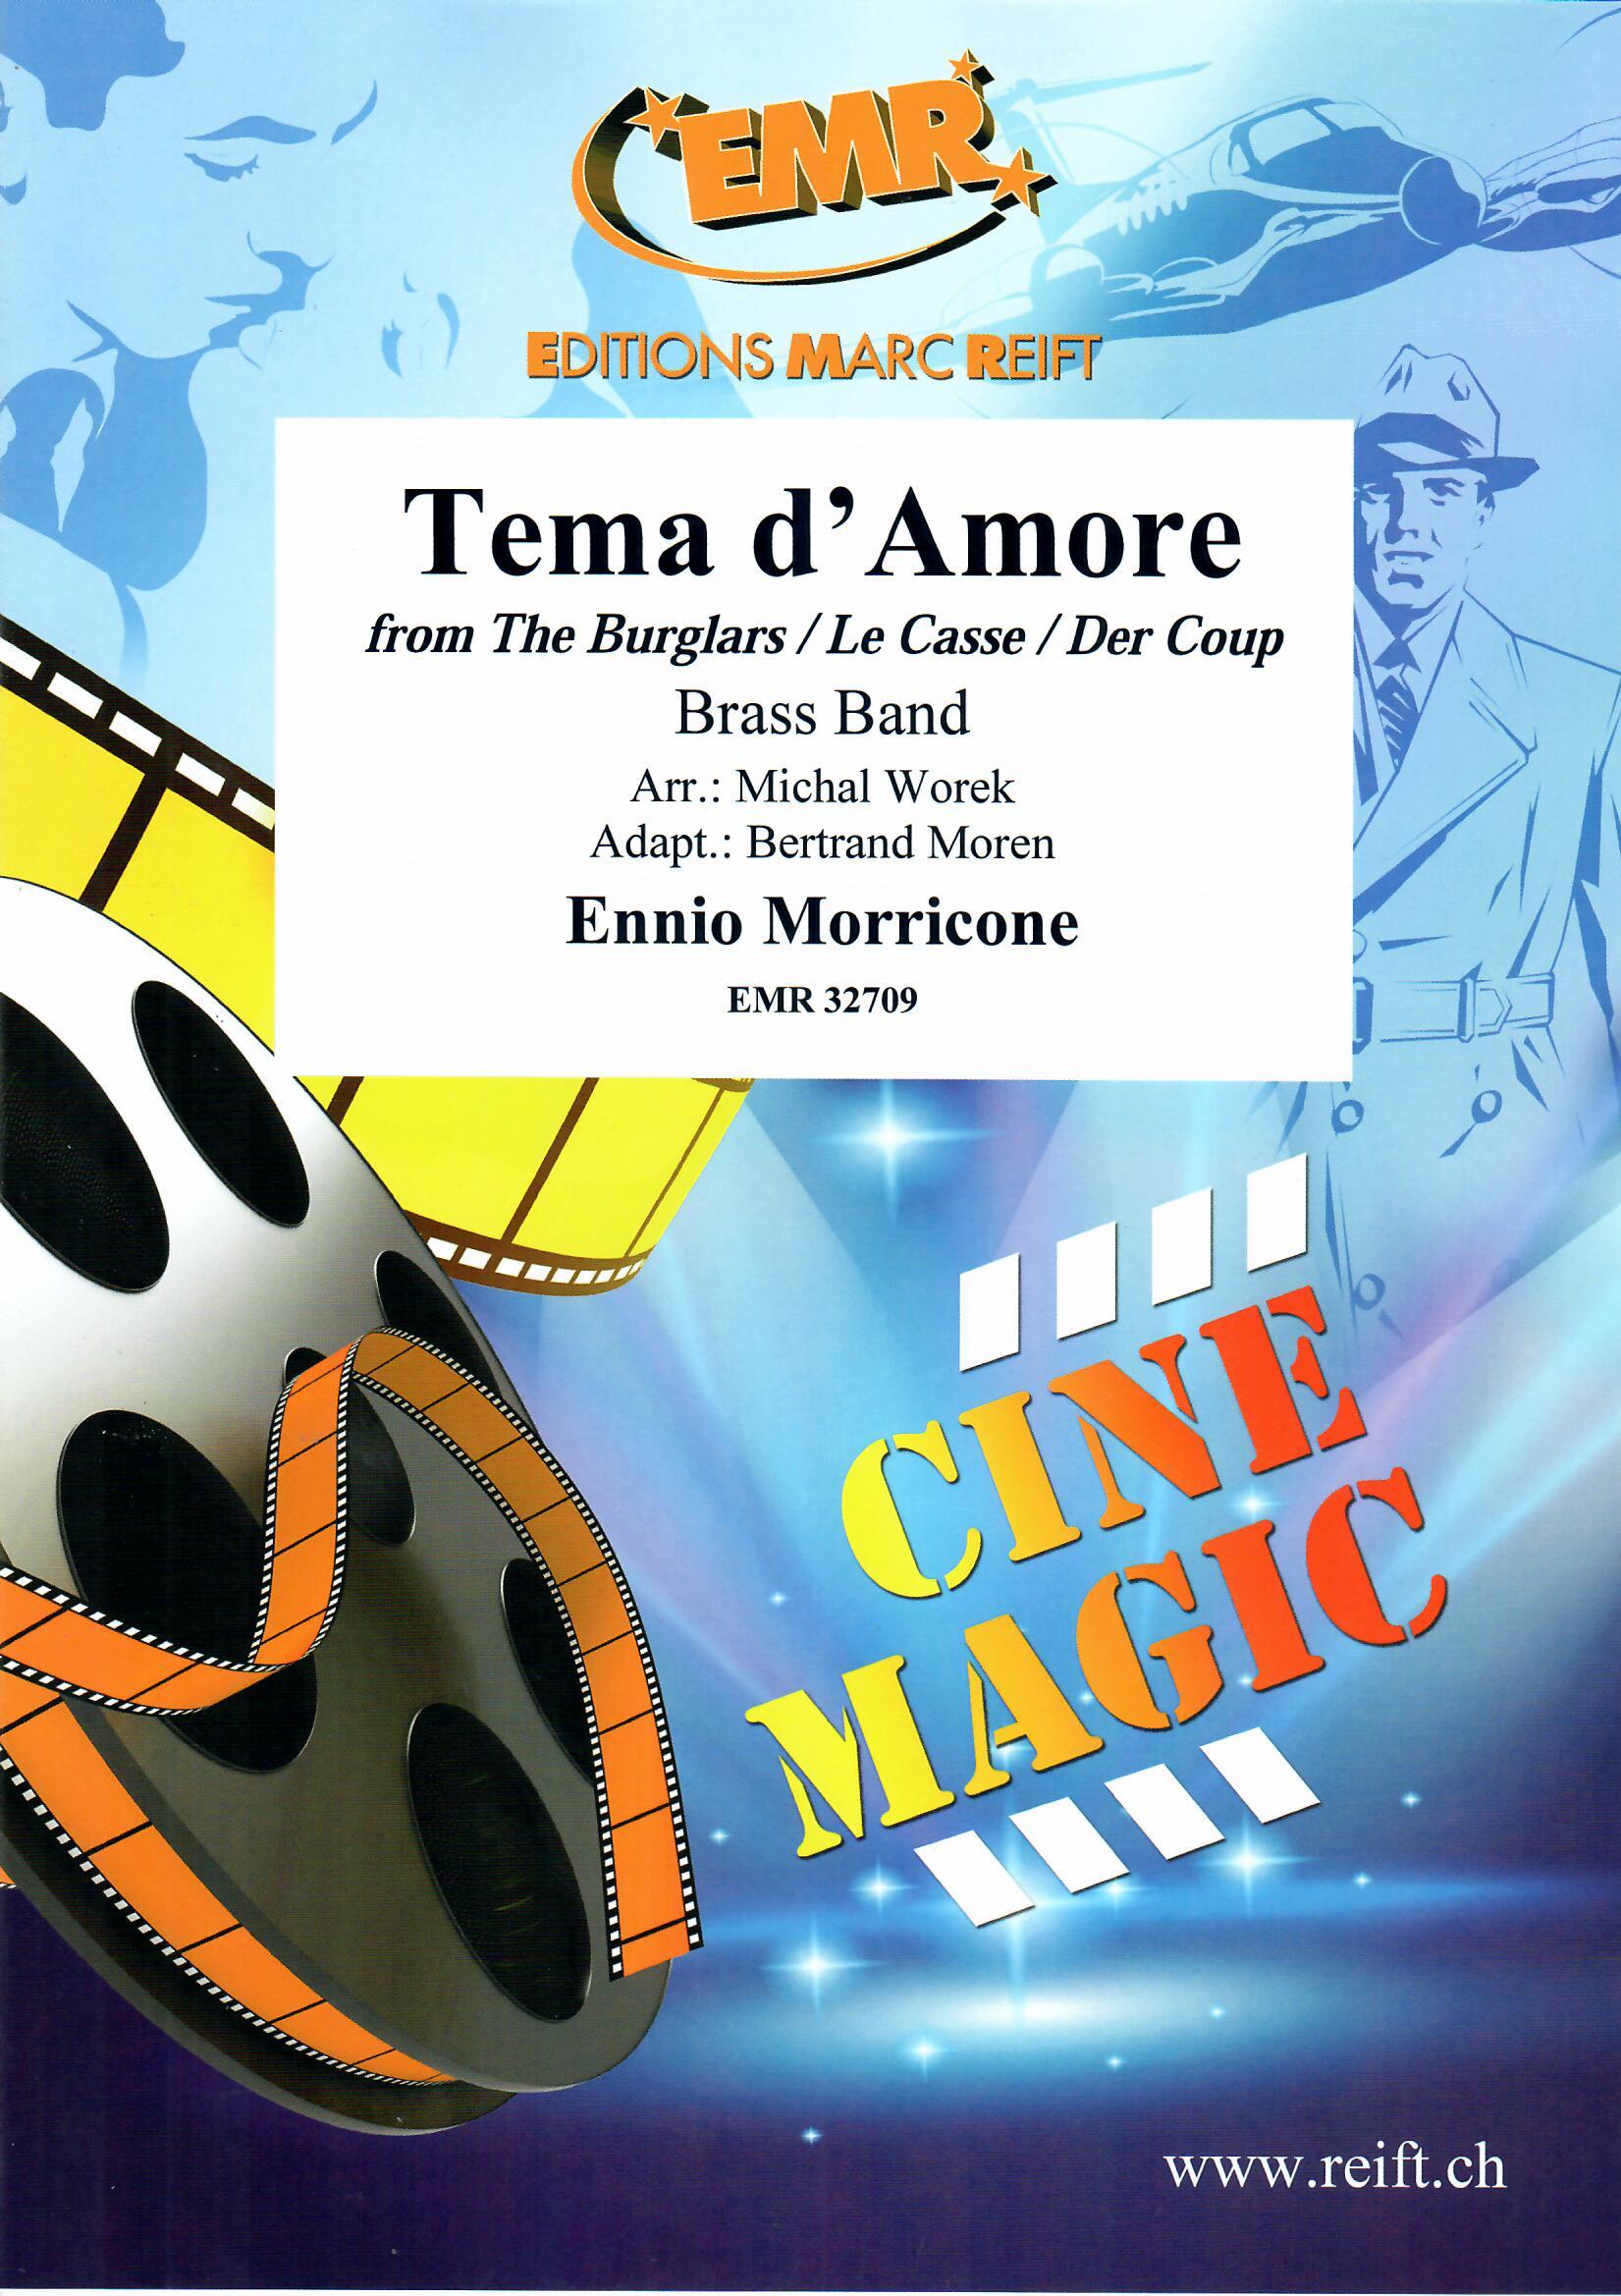 TEMA D'AMORE, NEW & RECENT Publications, LIGHT CONCERT MUSIC